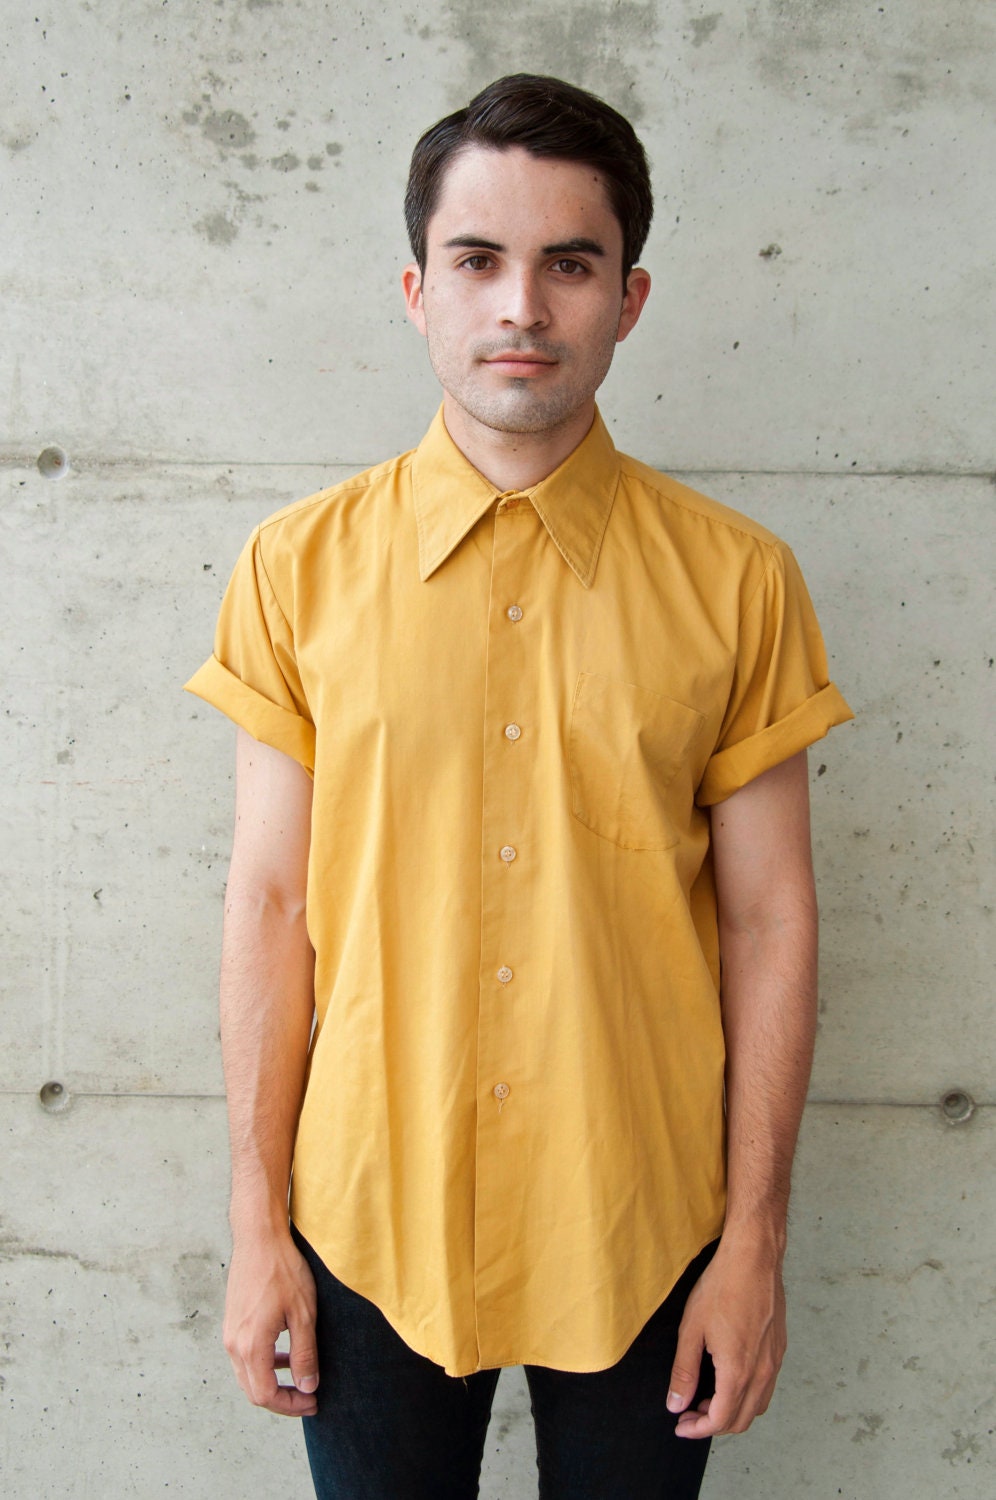 Yellow Dress Shirt